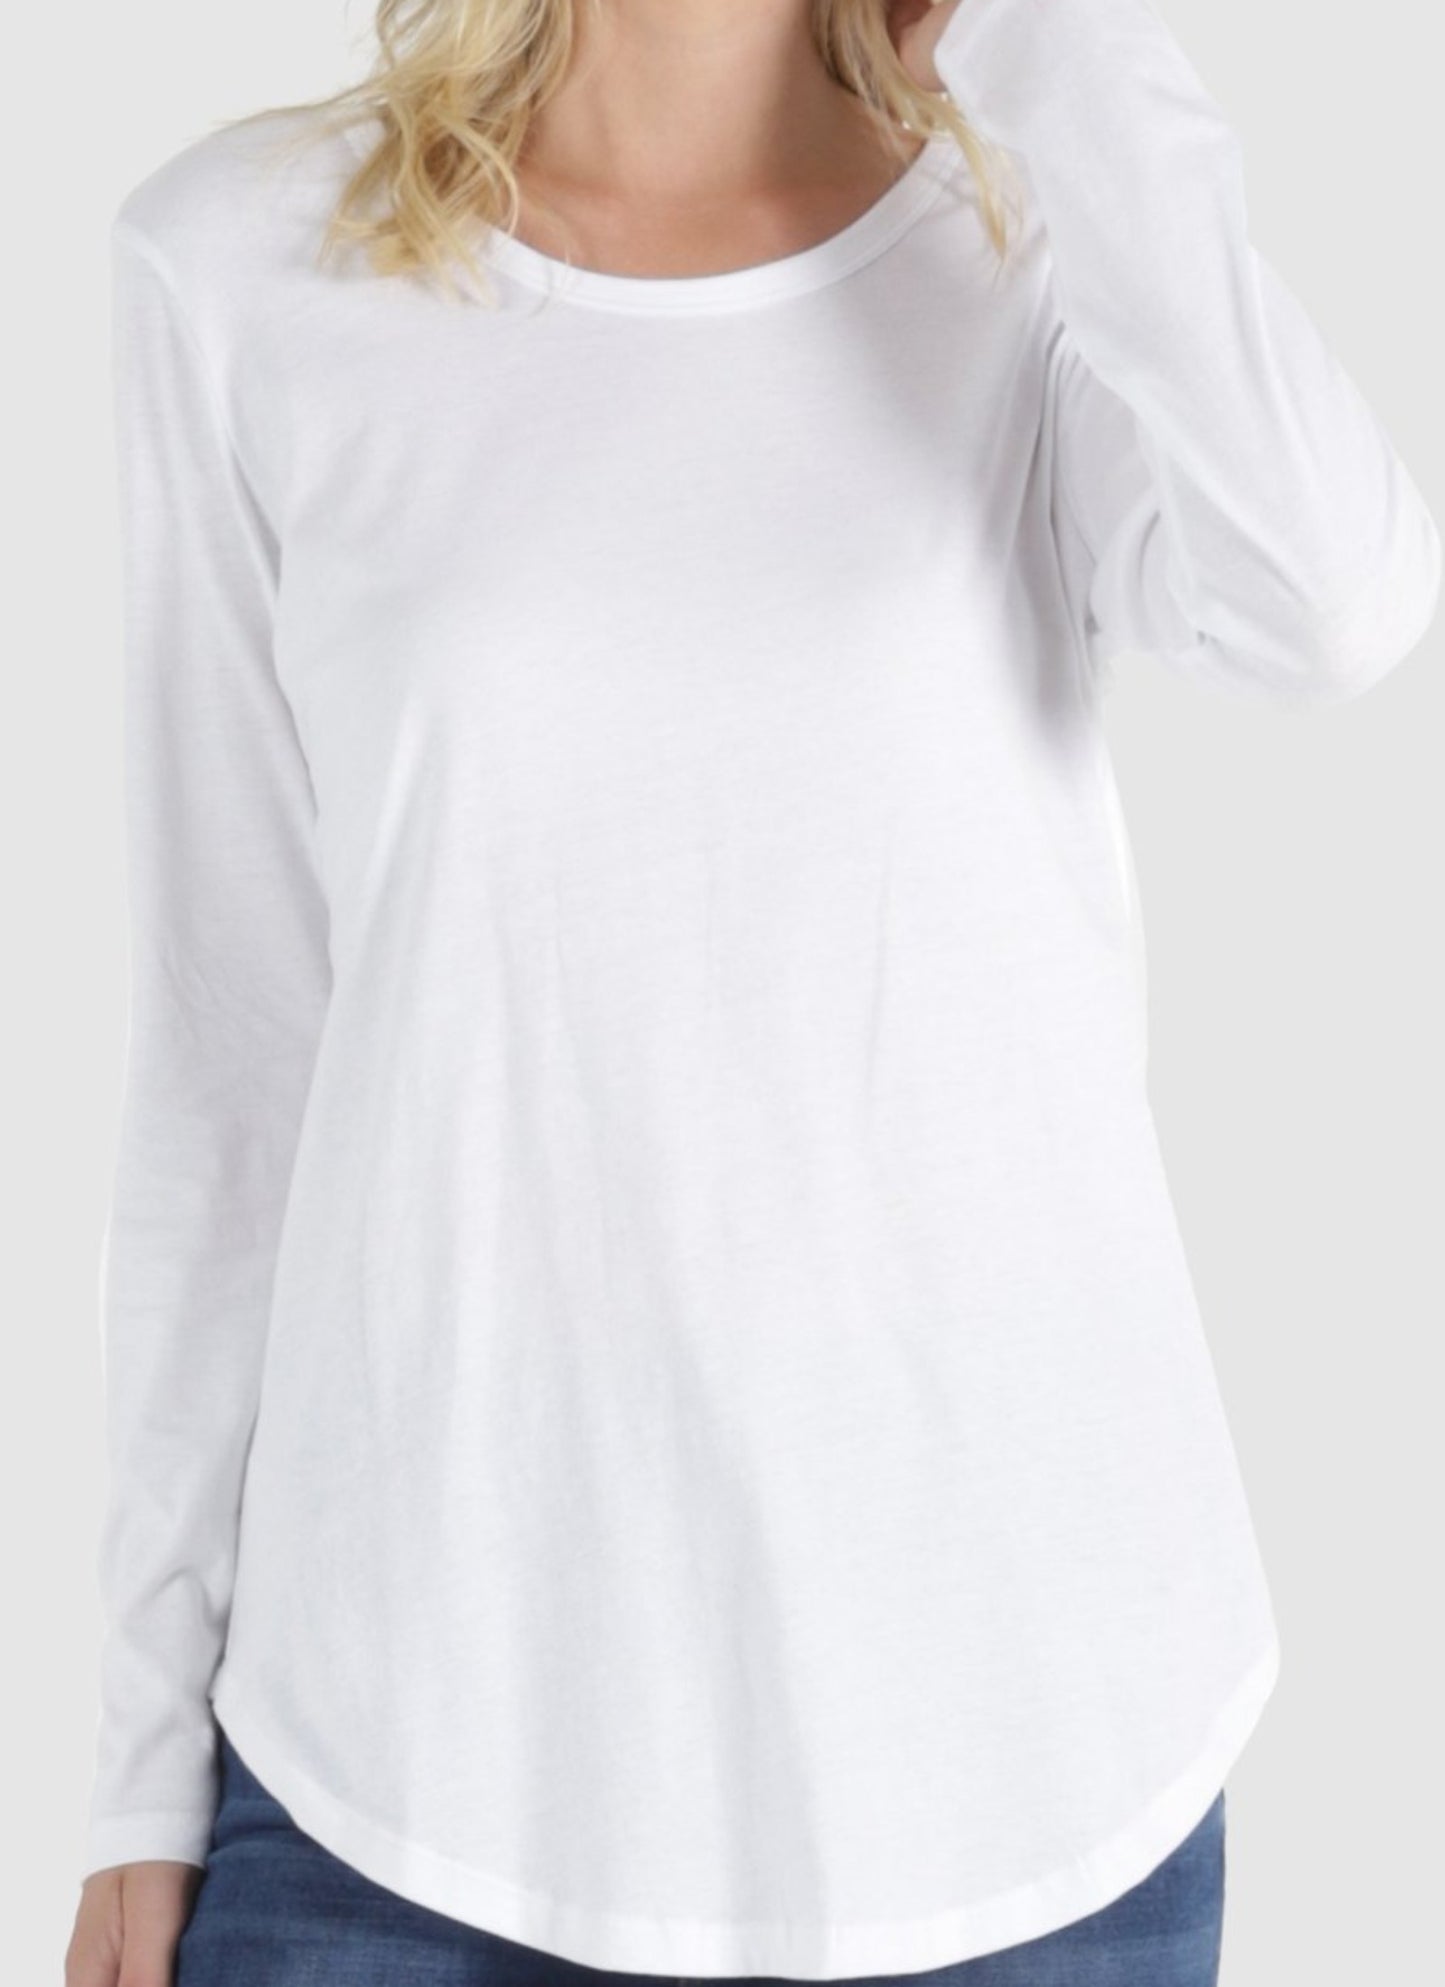 Megan Long Sleeve Top - White